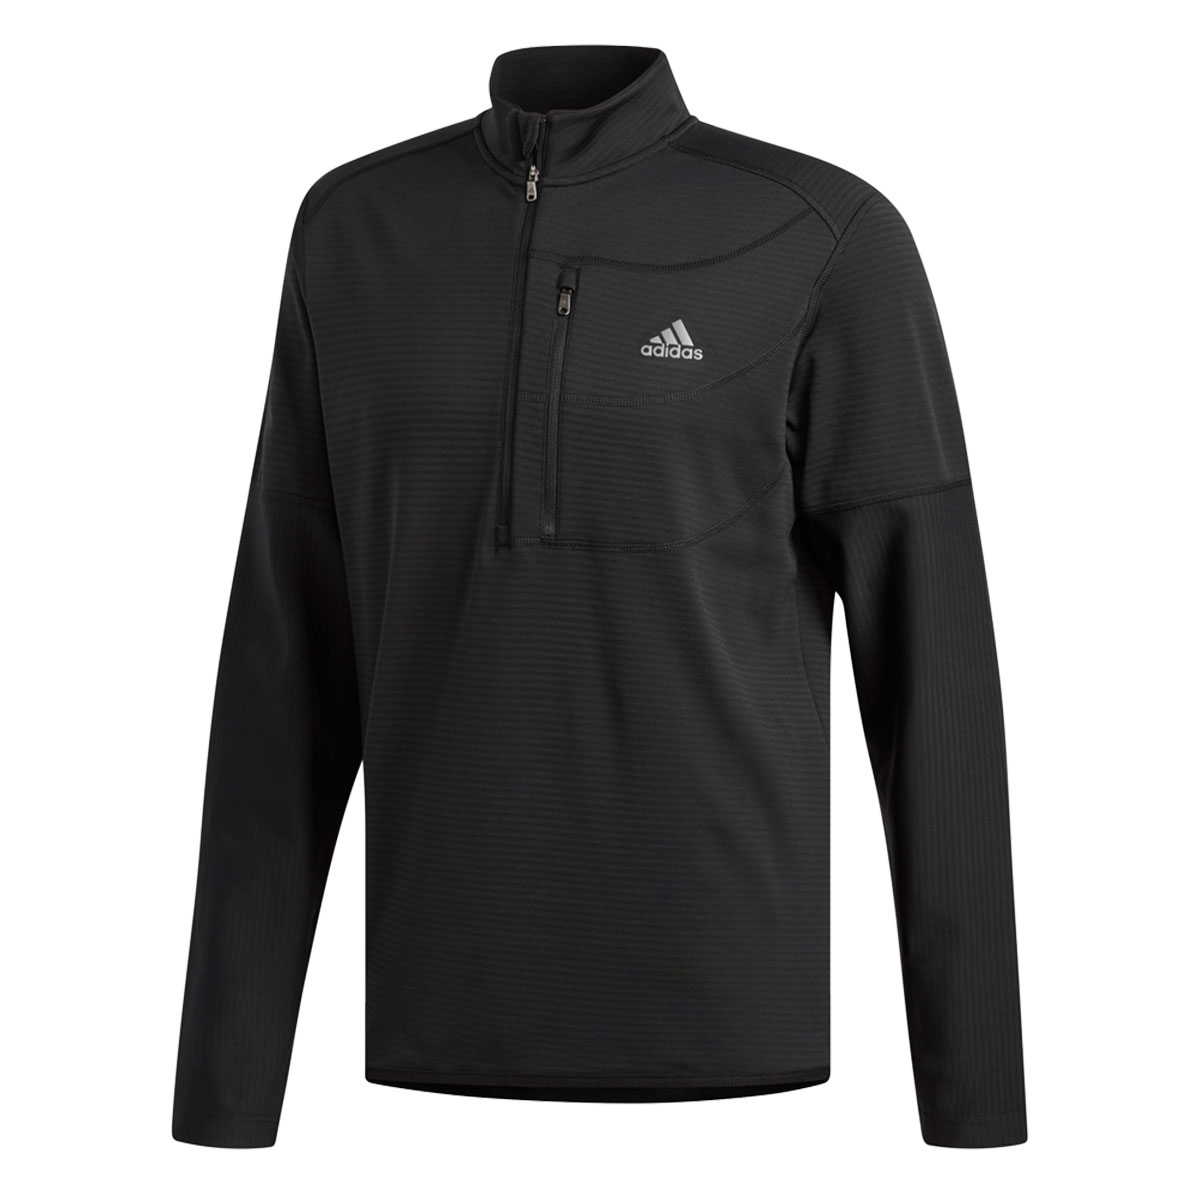 adidas Golf Climawarm Gridded Jacket | Online Golf